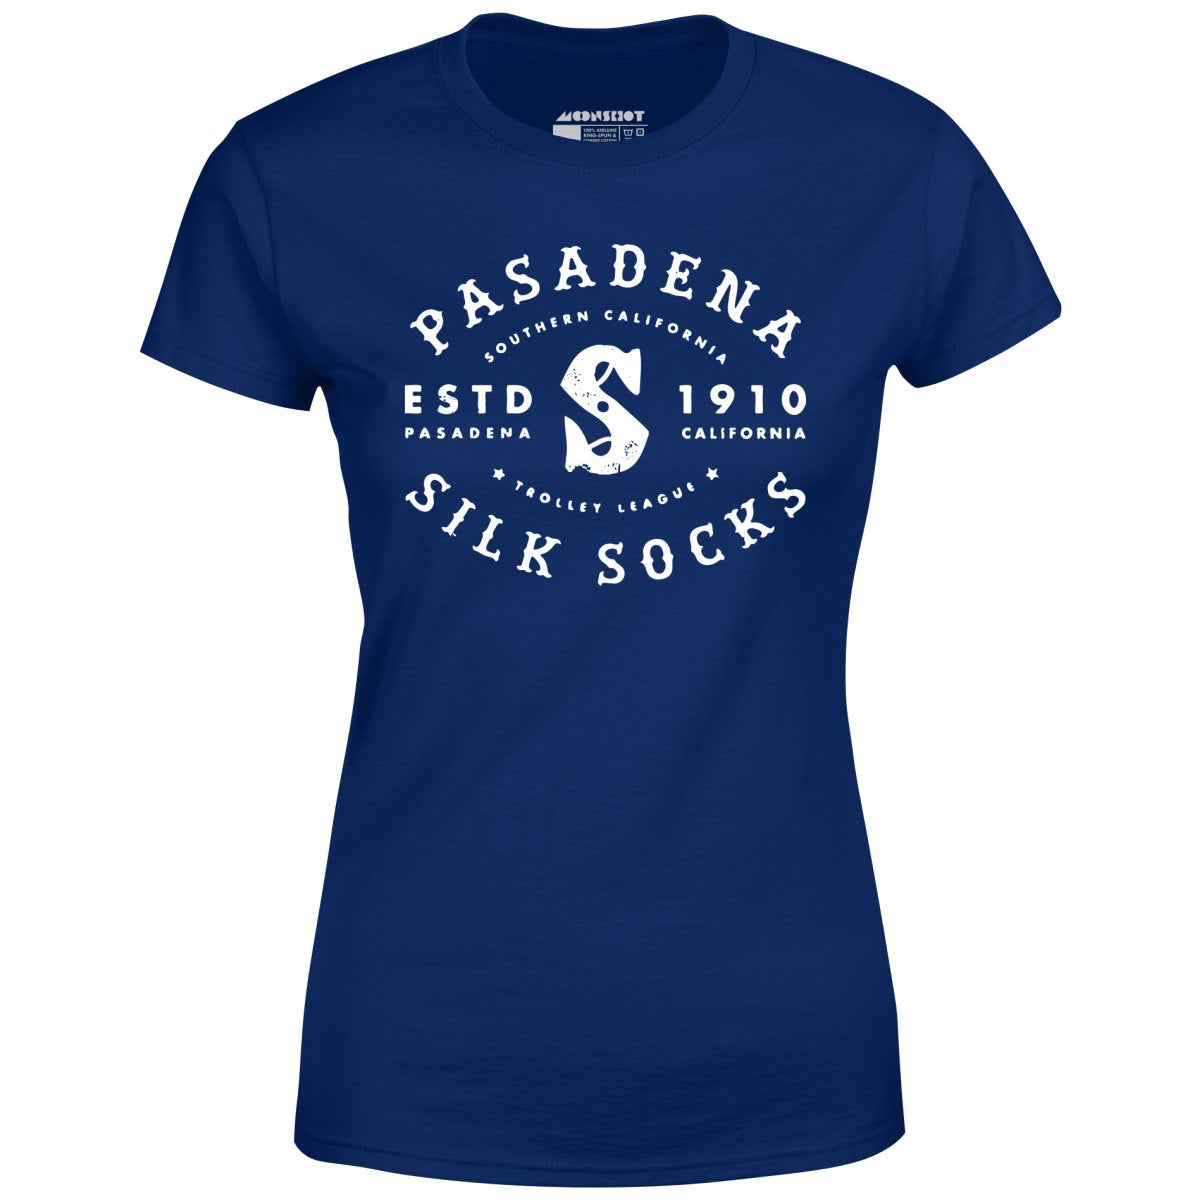 Pasadena Silk Socks - California - Vintage Defunct Baseball Teams - Women's T-Shirt